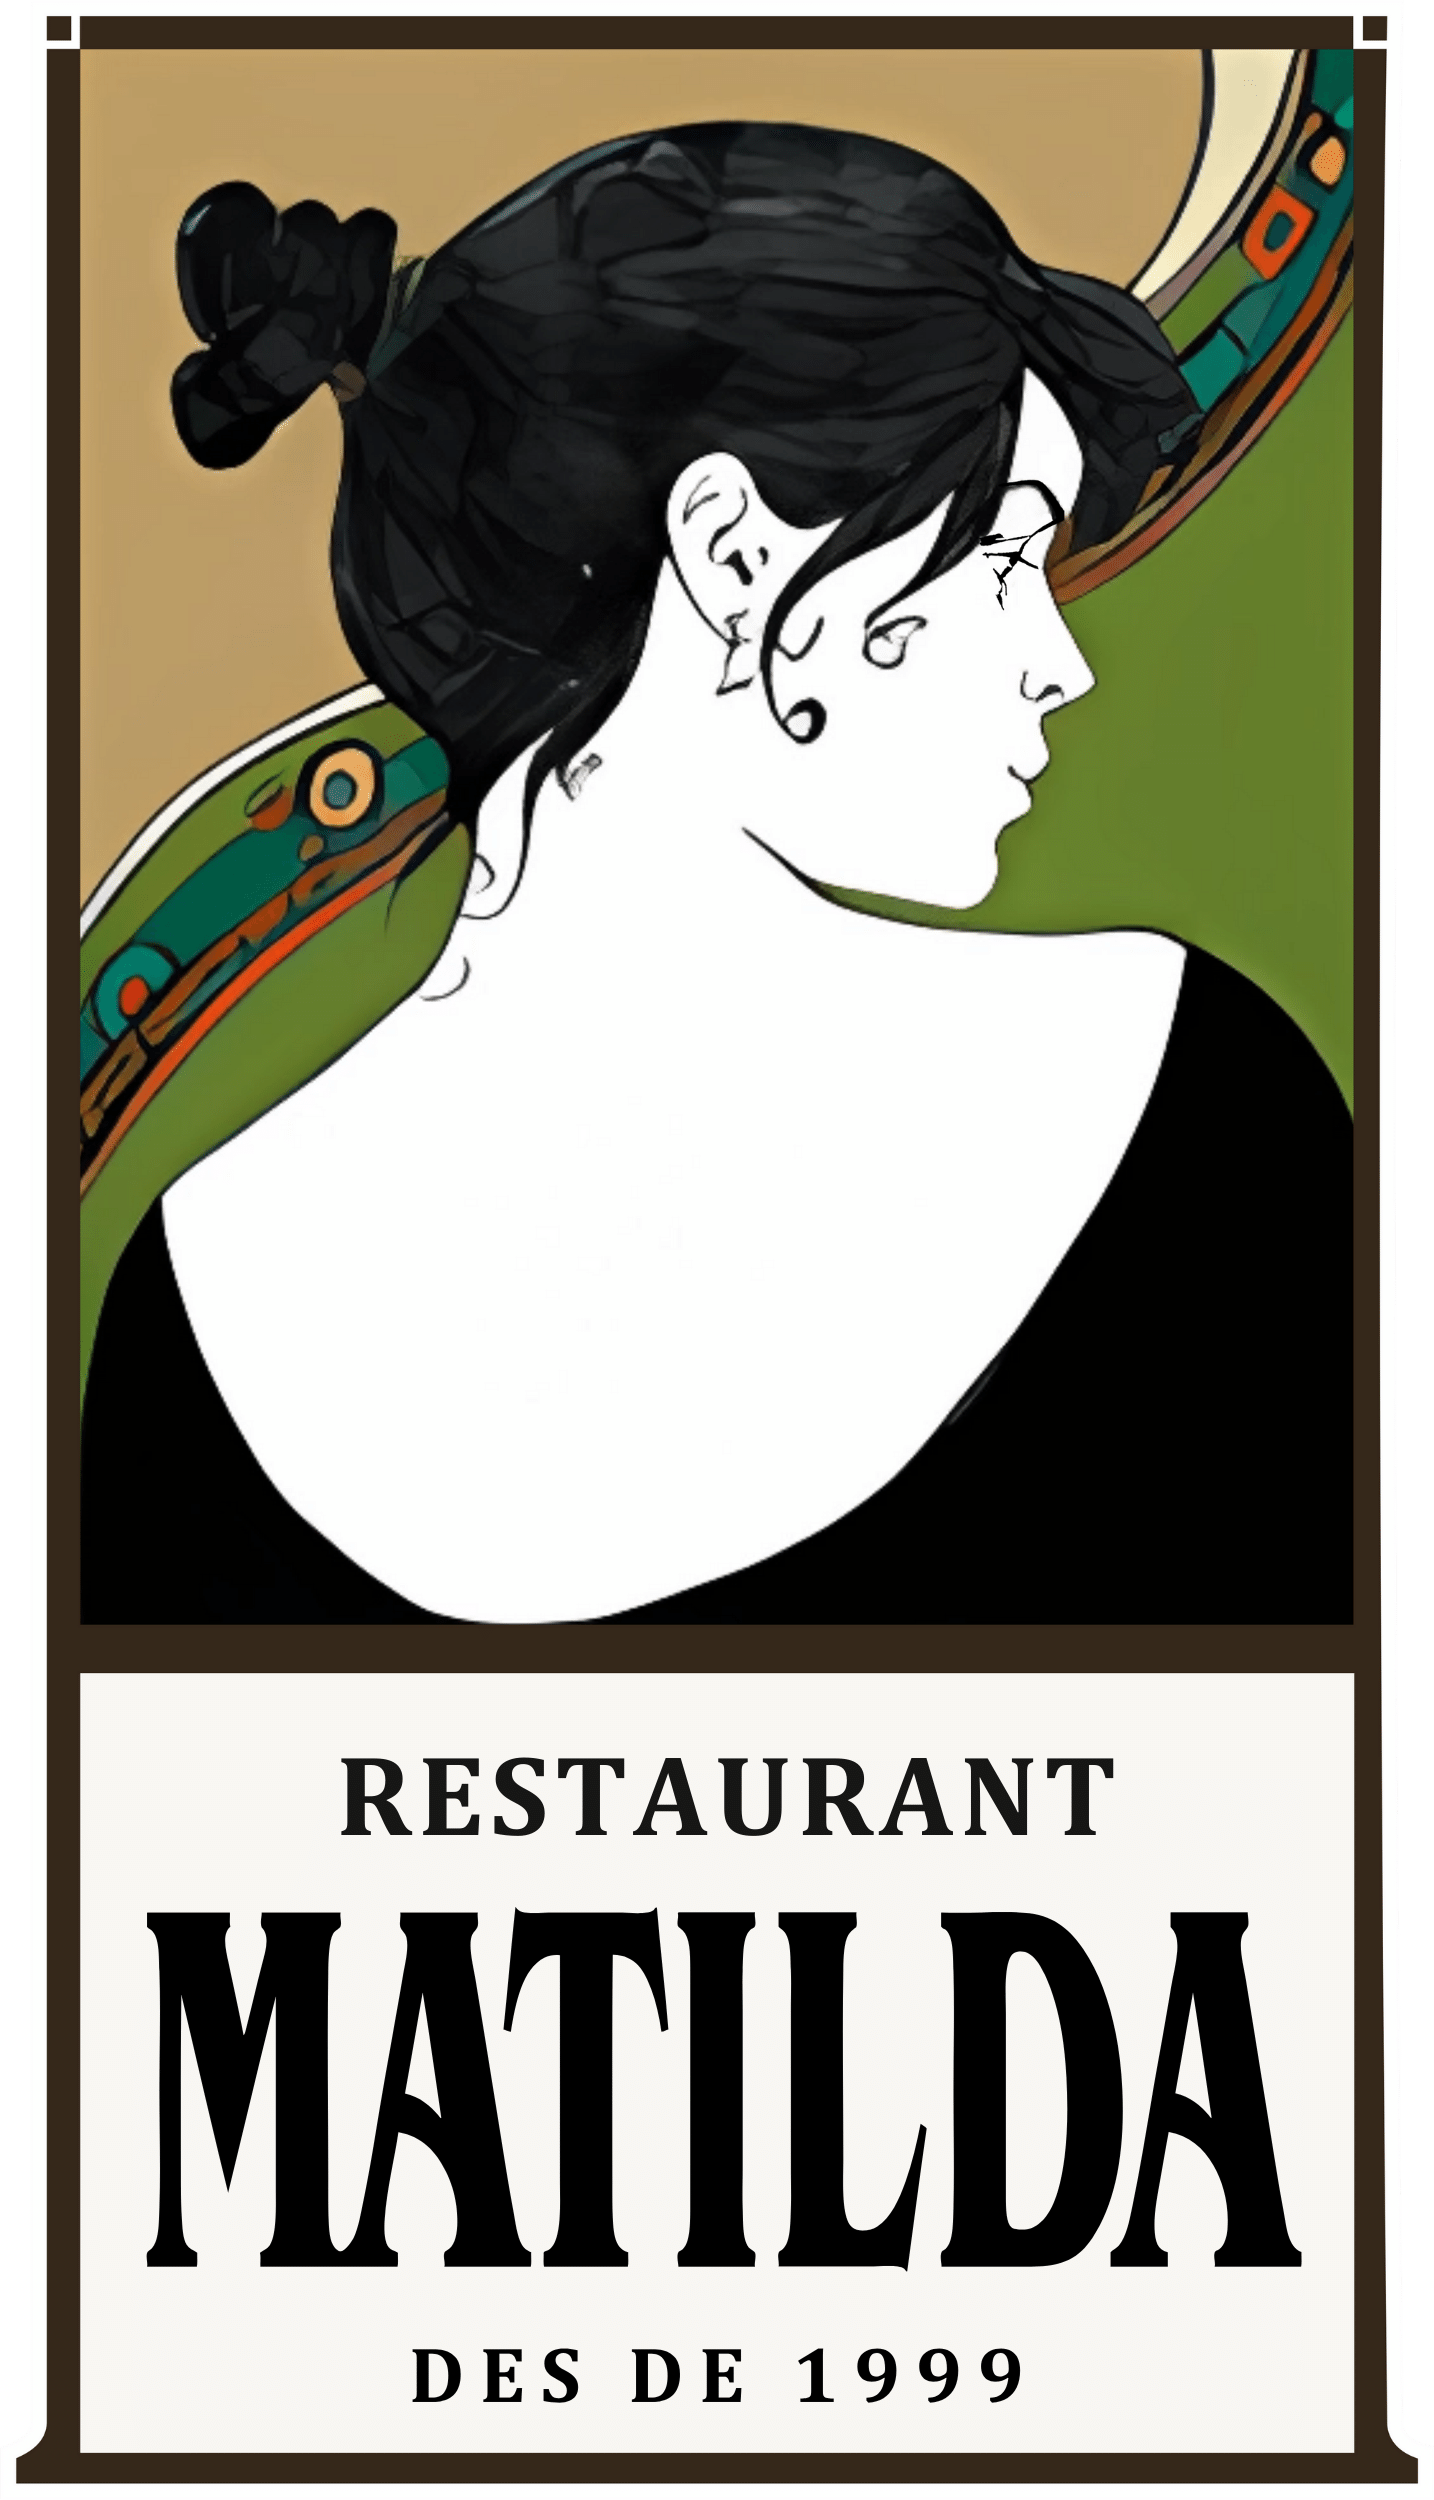 logo restaurant santcugat matilda